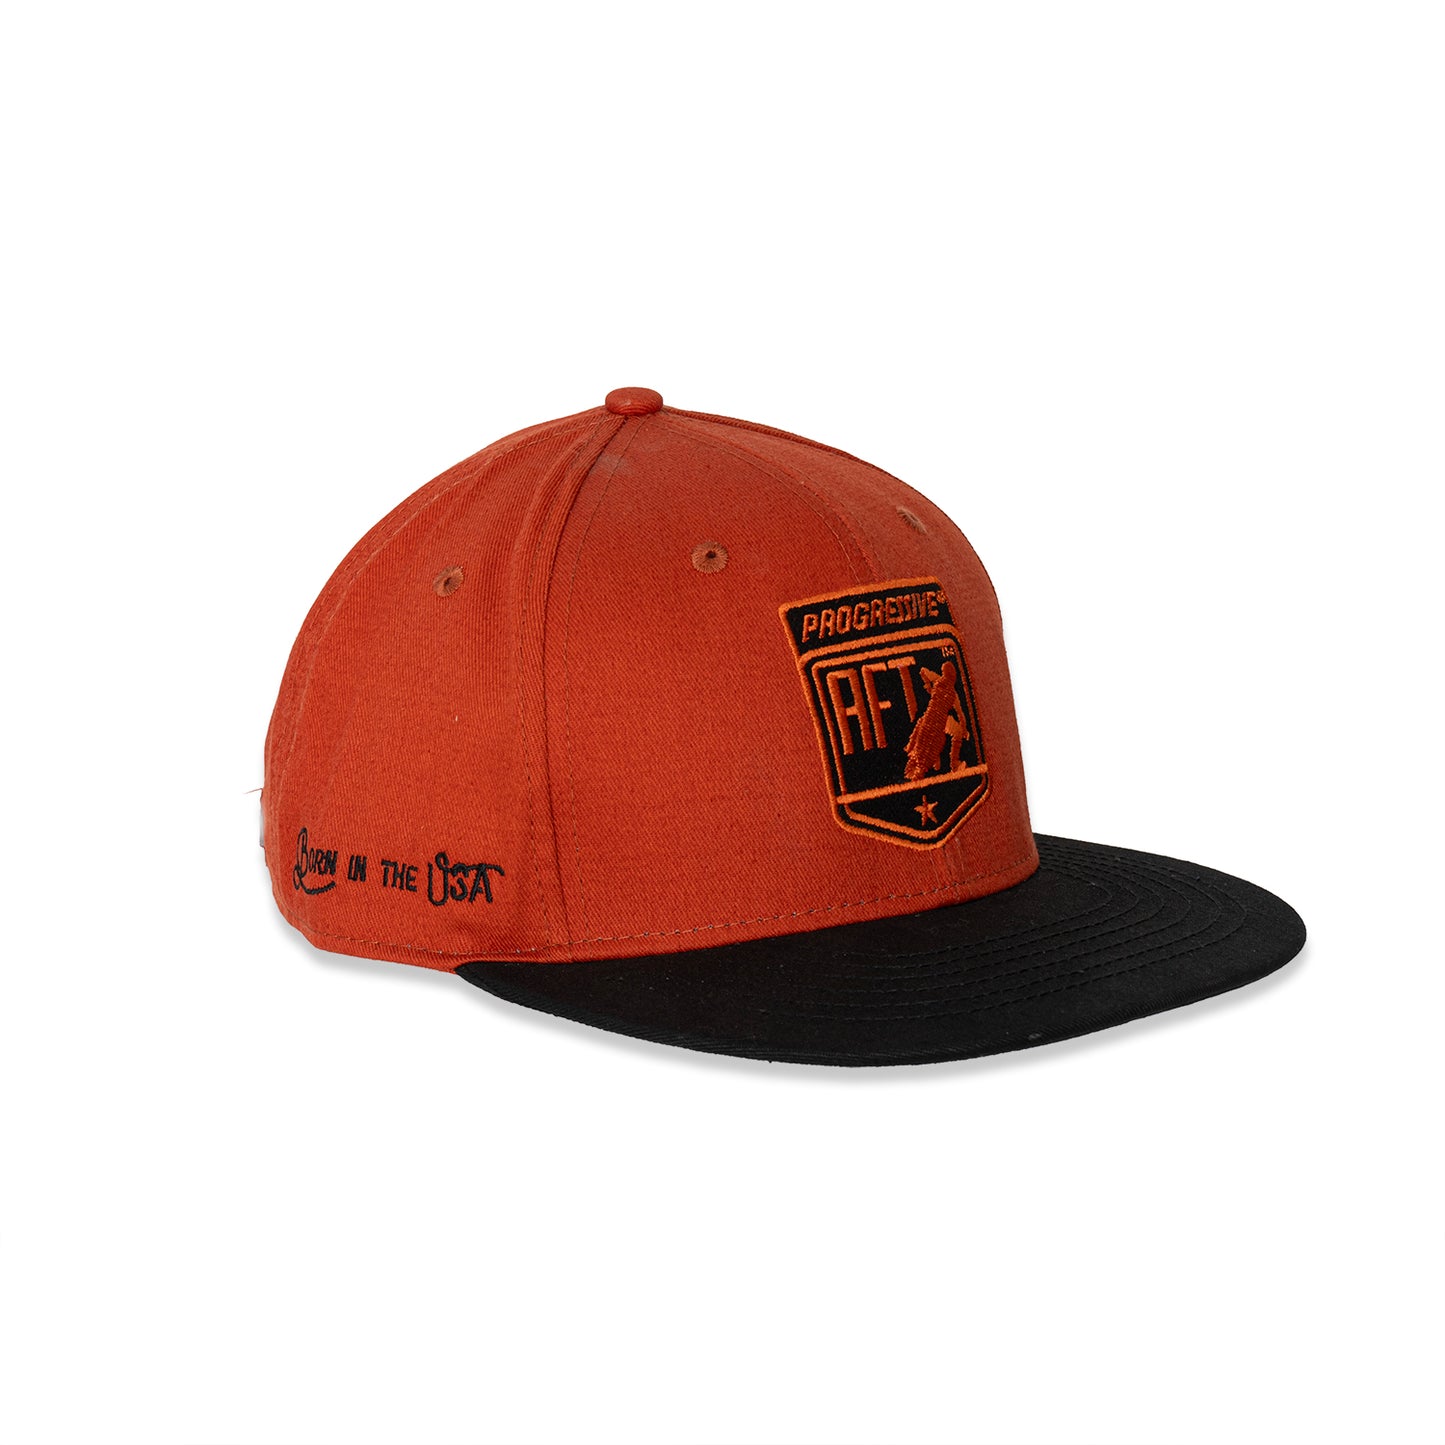 American Flat Track Flatbill Hat - Orange/Black